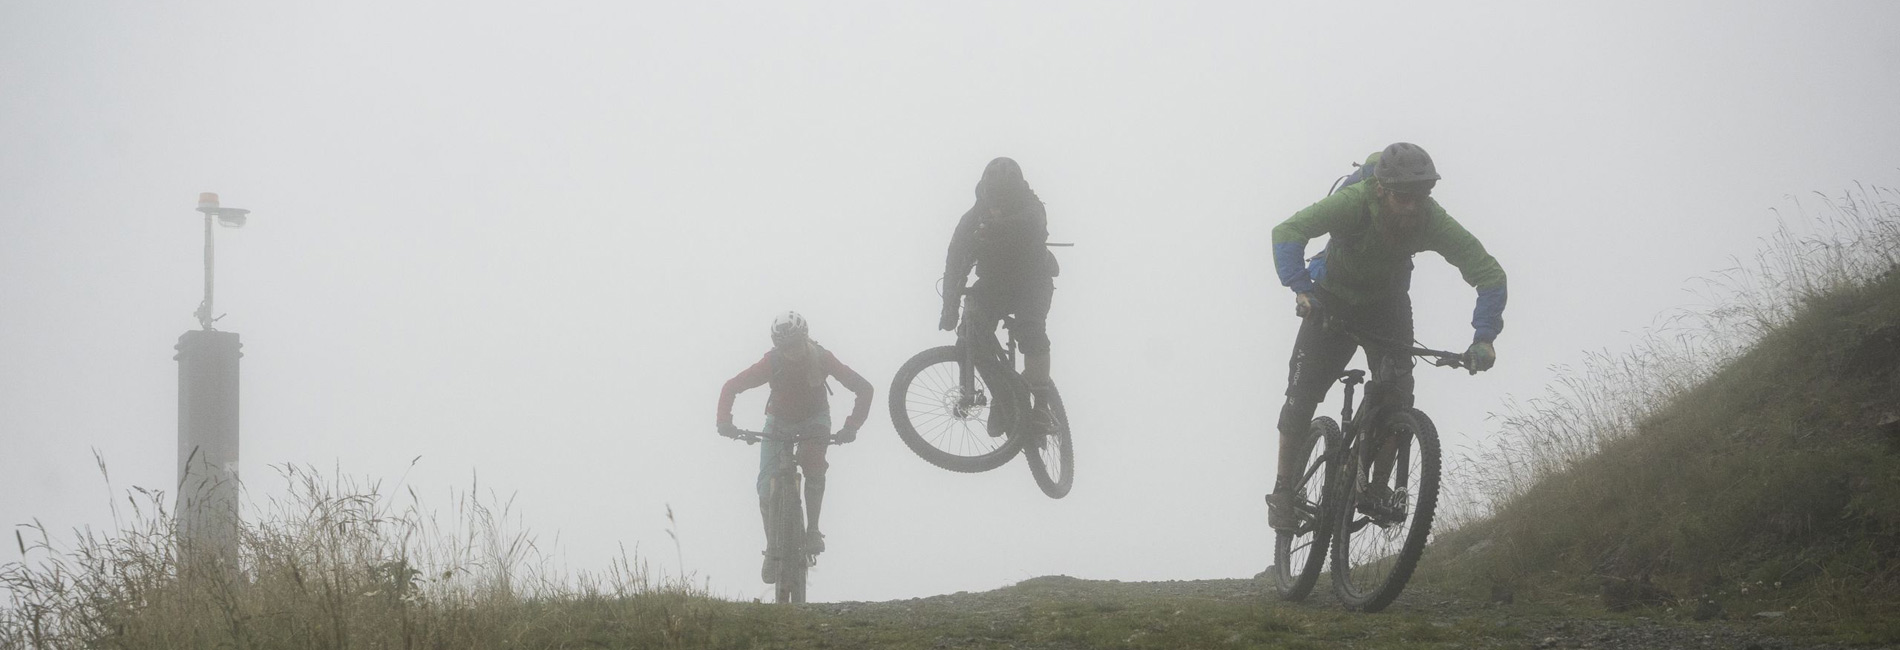 Rasantes Biken im Nebel im Bikepark Kirchberg - copyright Tirol Werbung / Neusser Peter